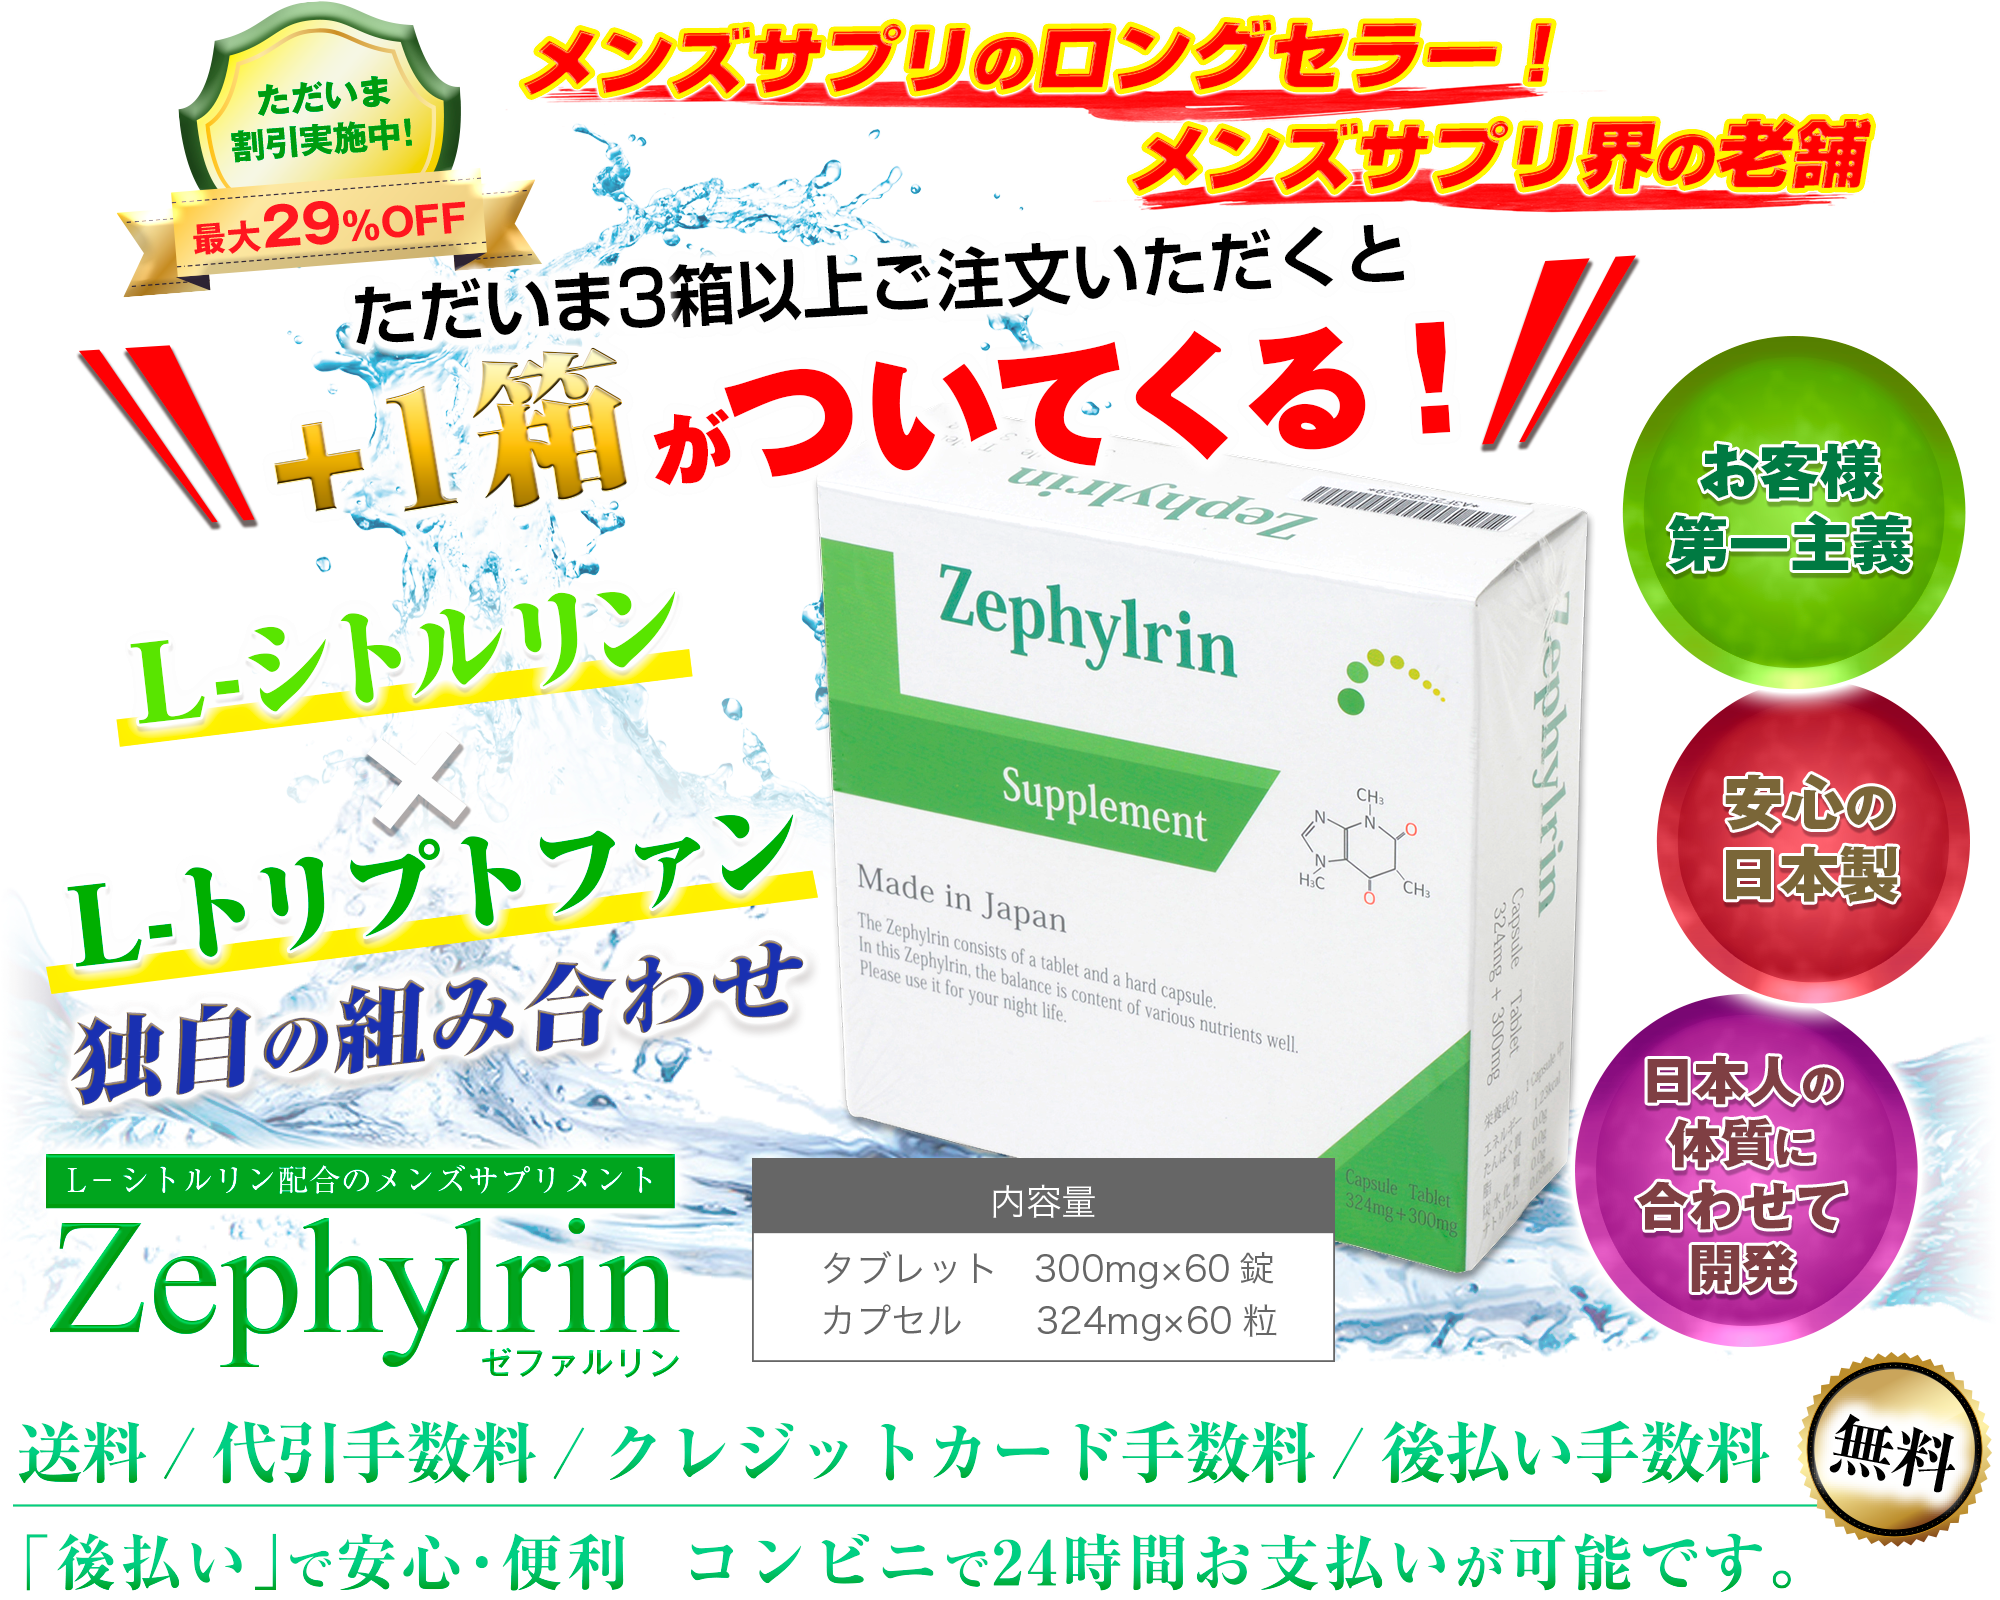 Zephylrin ゼファルリン 3箱 買い保障できる 9800円引き sandorobotics.com